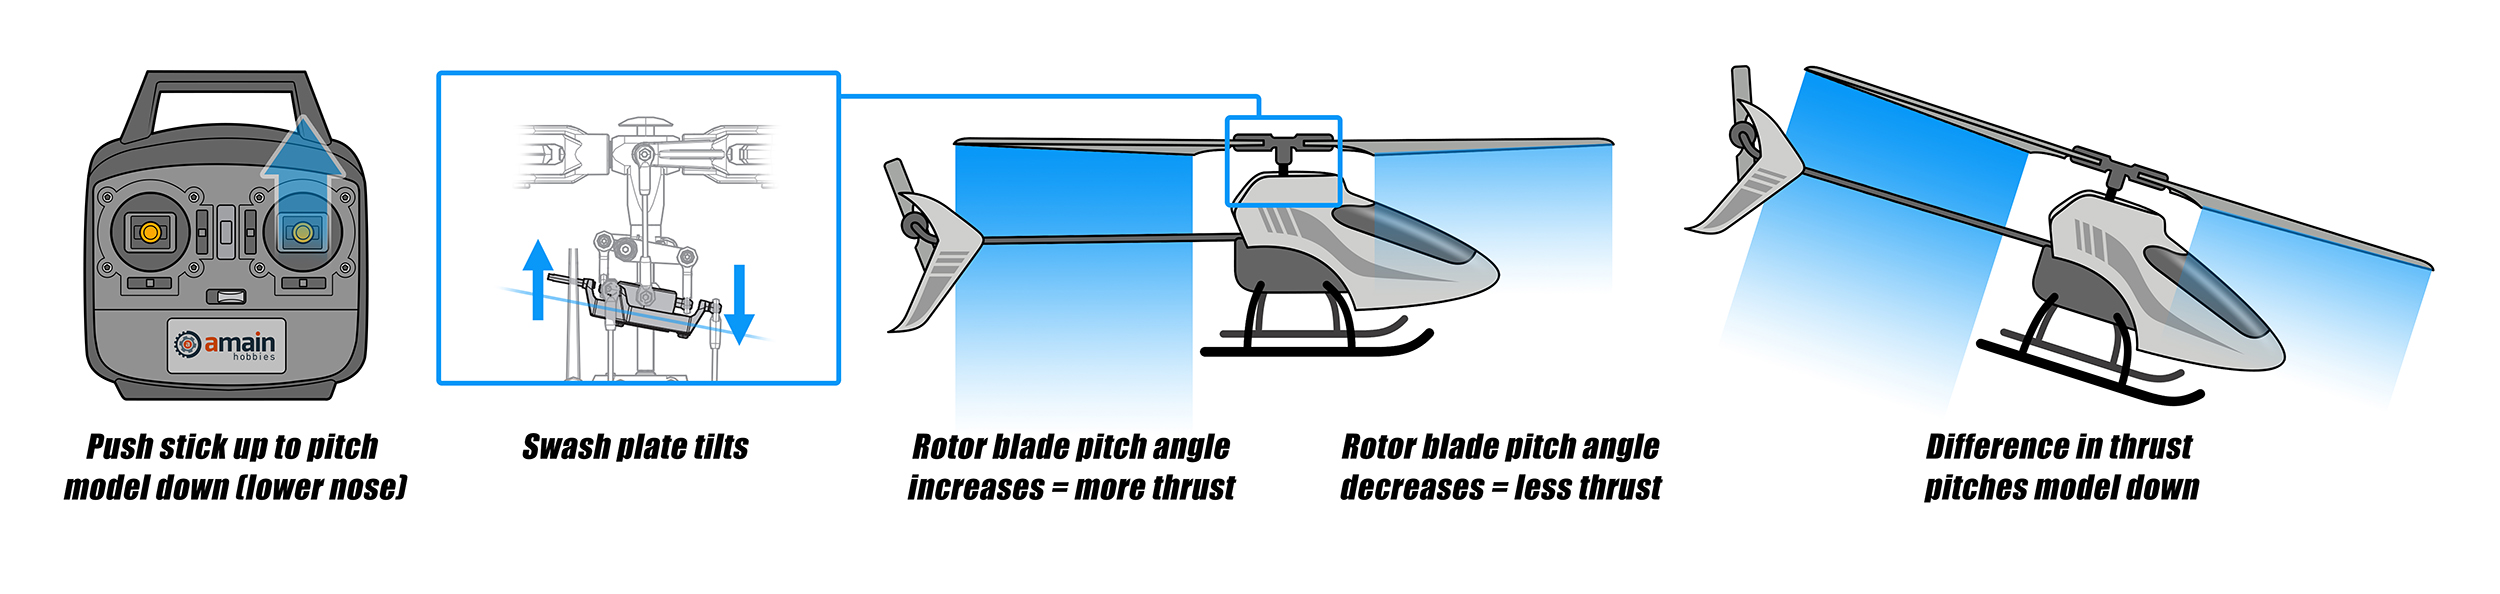 Understanding Tranmistter Flight Controls - Swashplate Action